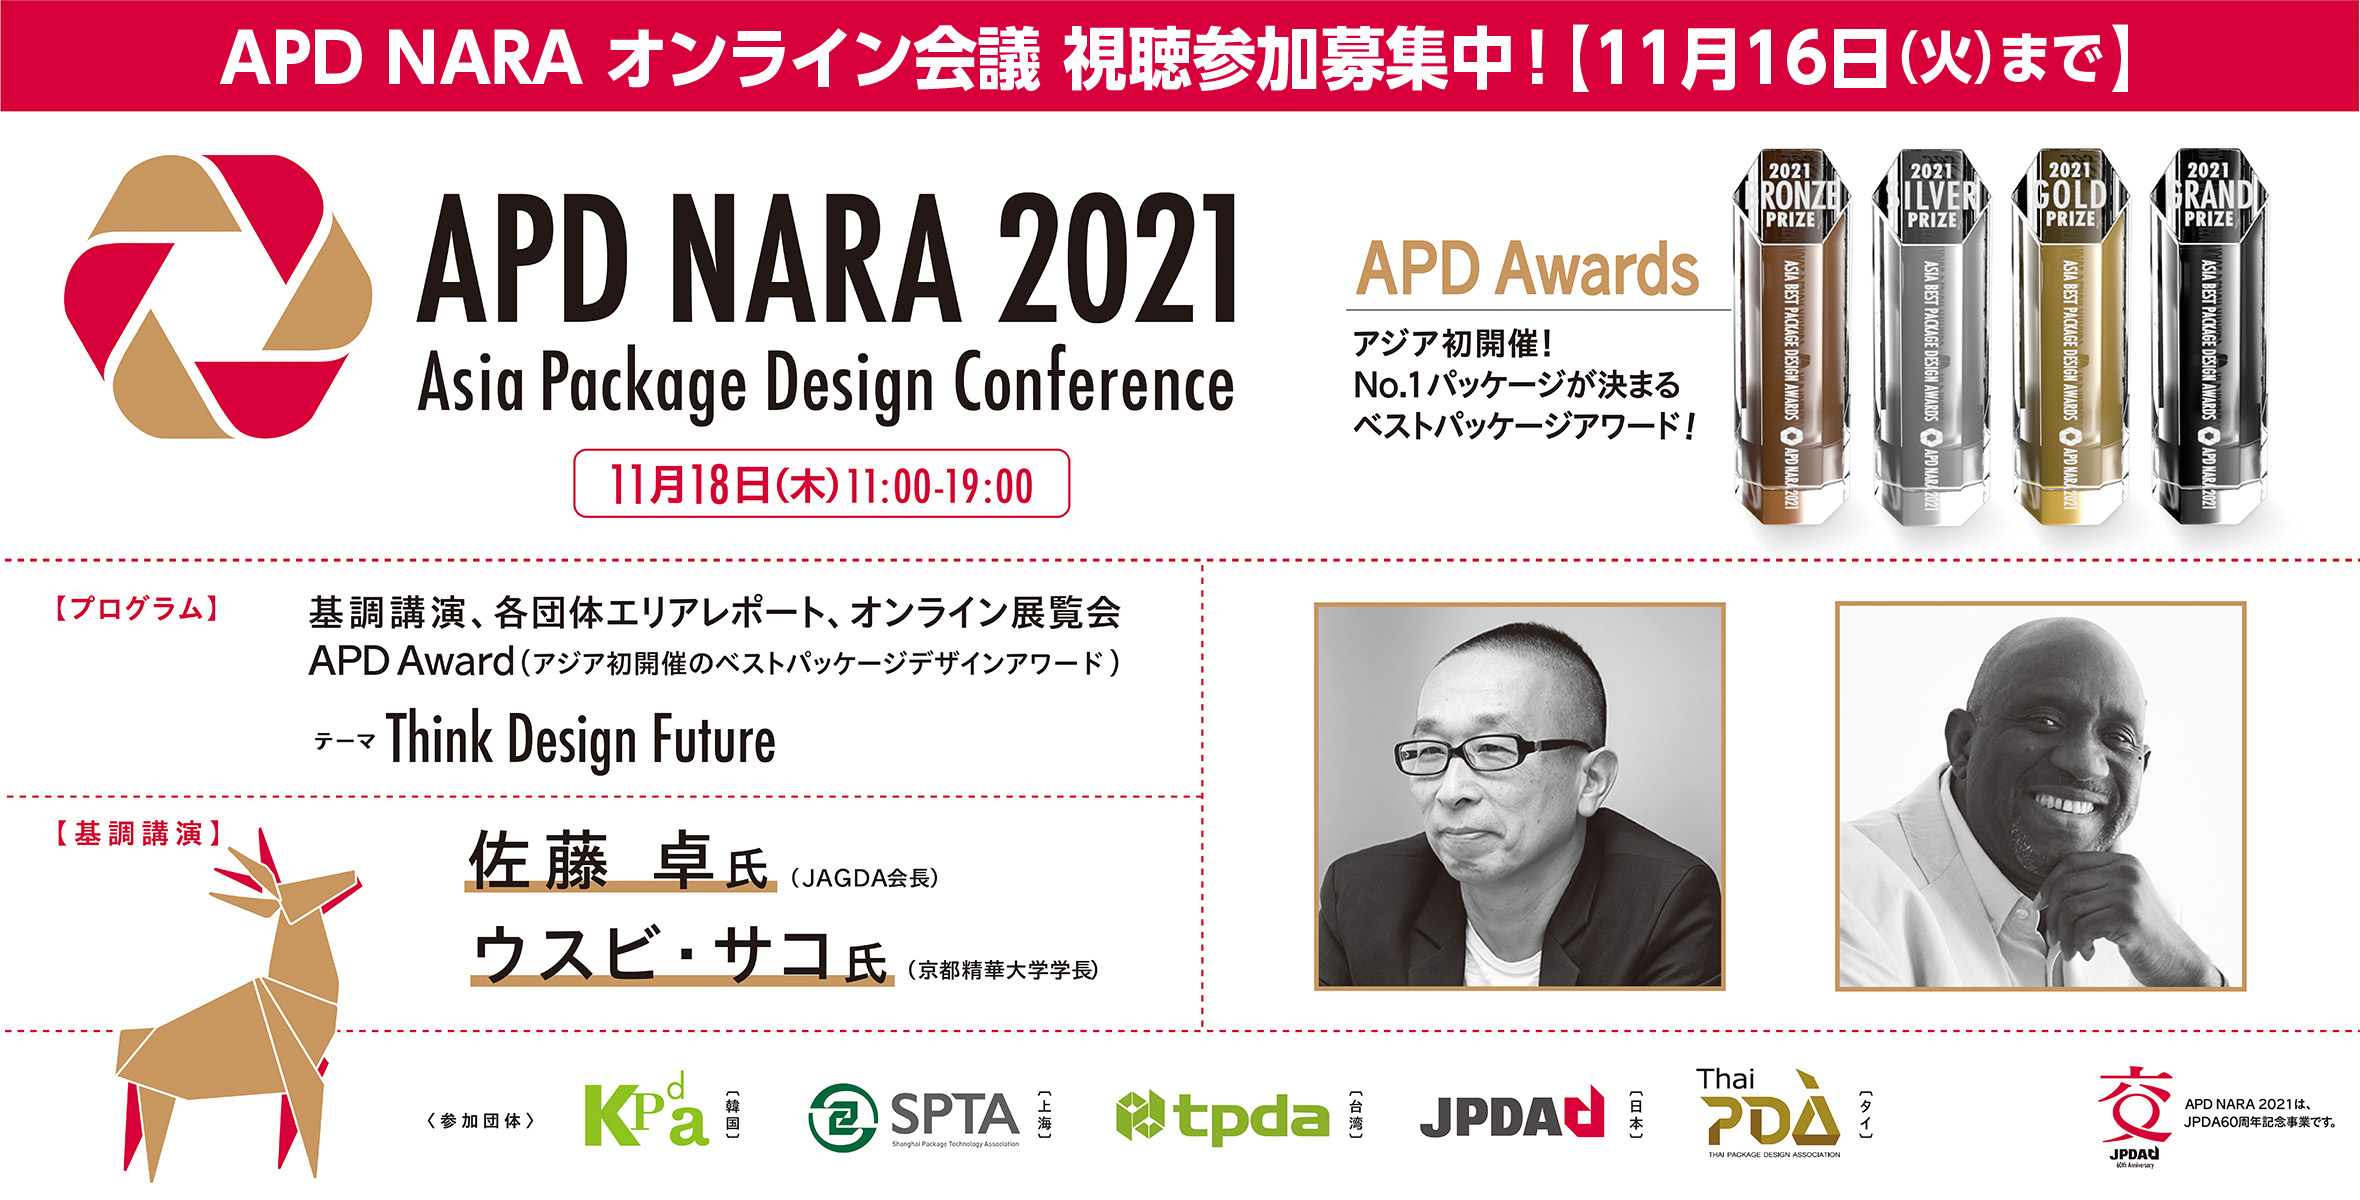 APD NARA 2021 開催のお知らせのイメージ